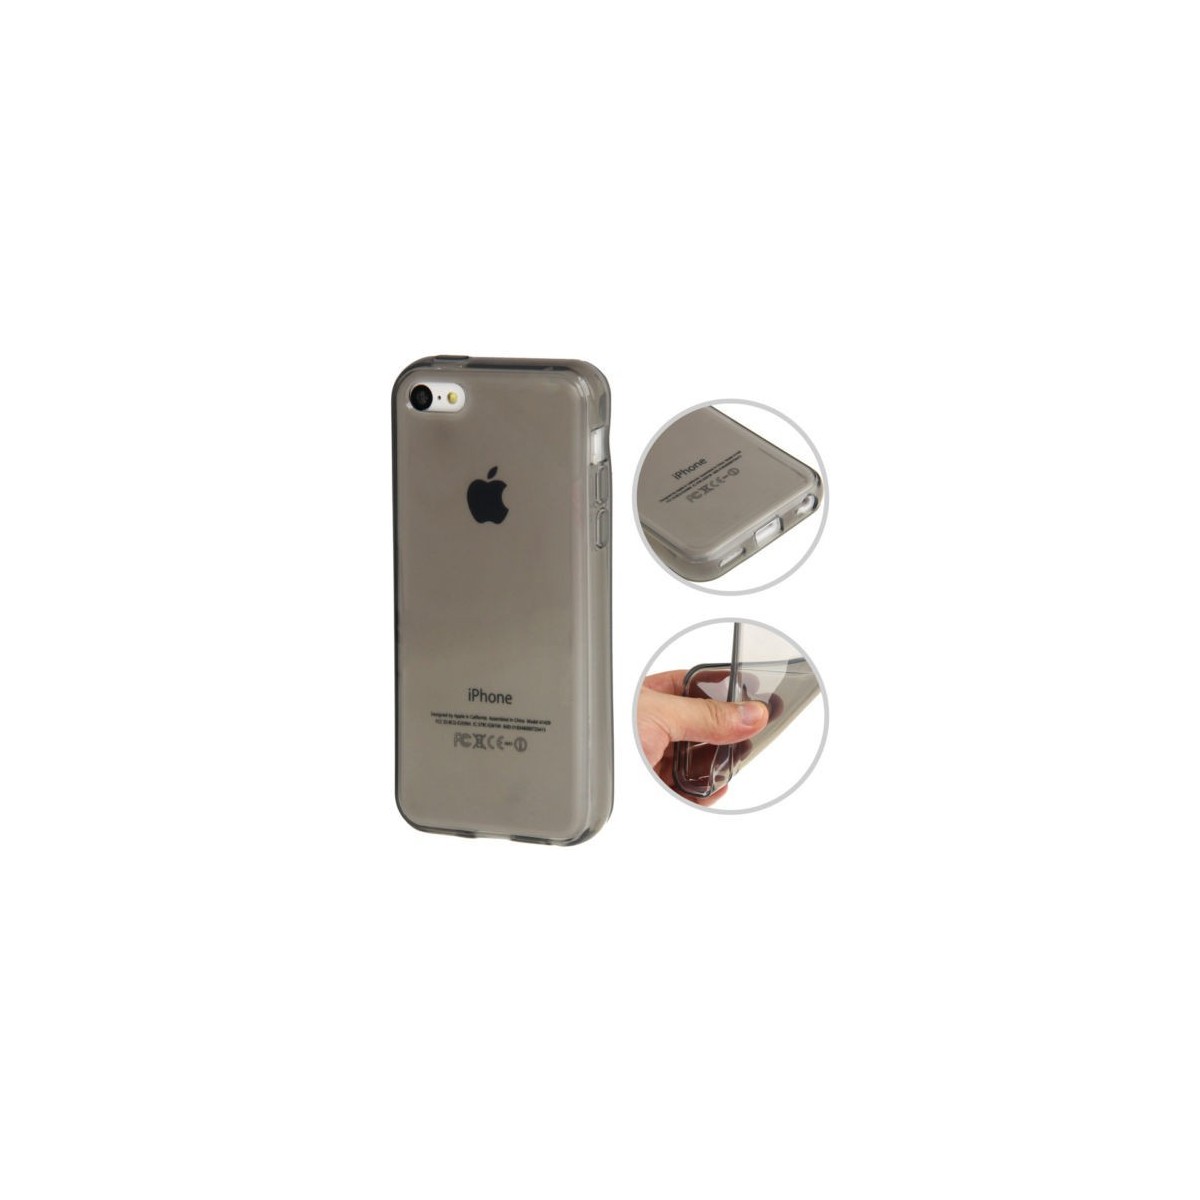 Coque lisse en Silicone Gel (TPU) pour iPhone 5C Gris